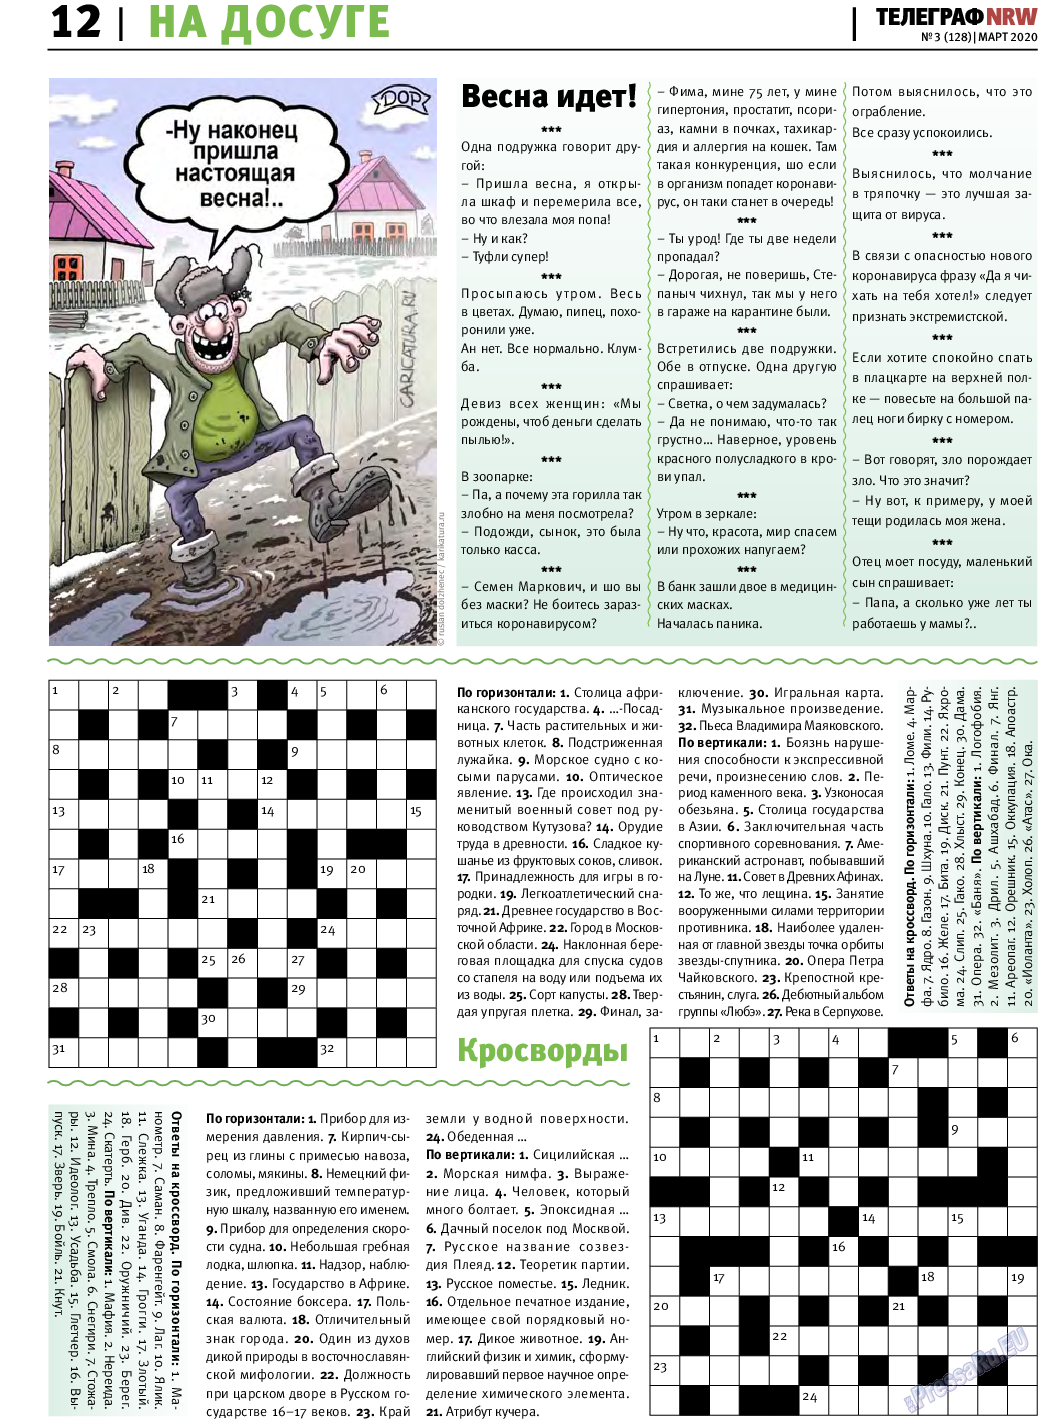 Телеграф NRW, газета. 2020 №3 стр.12